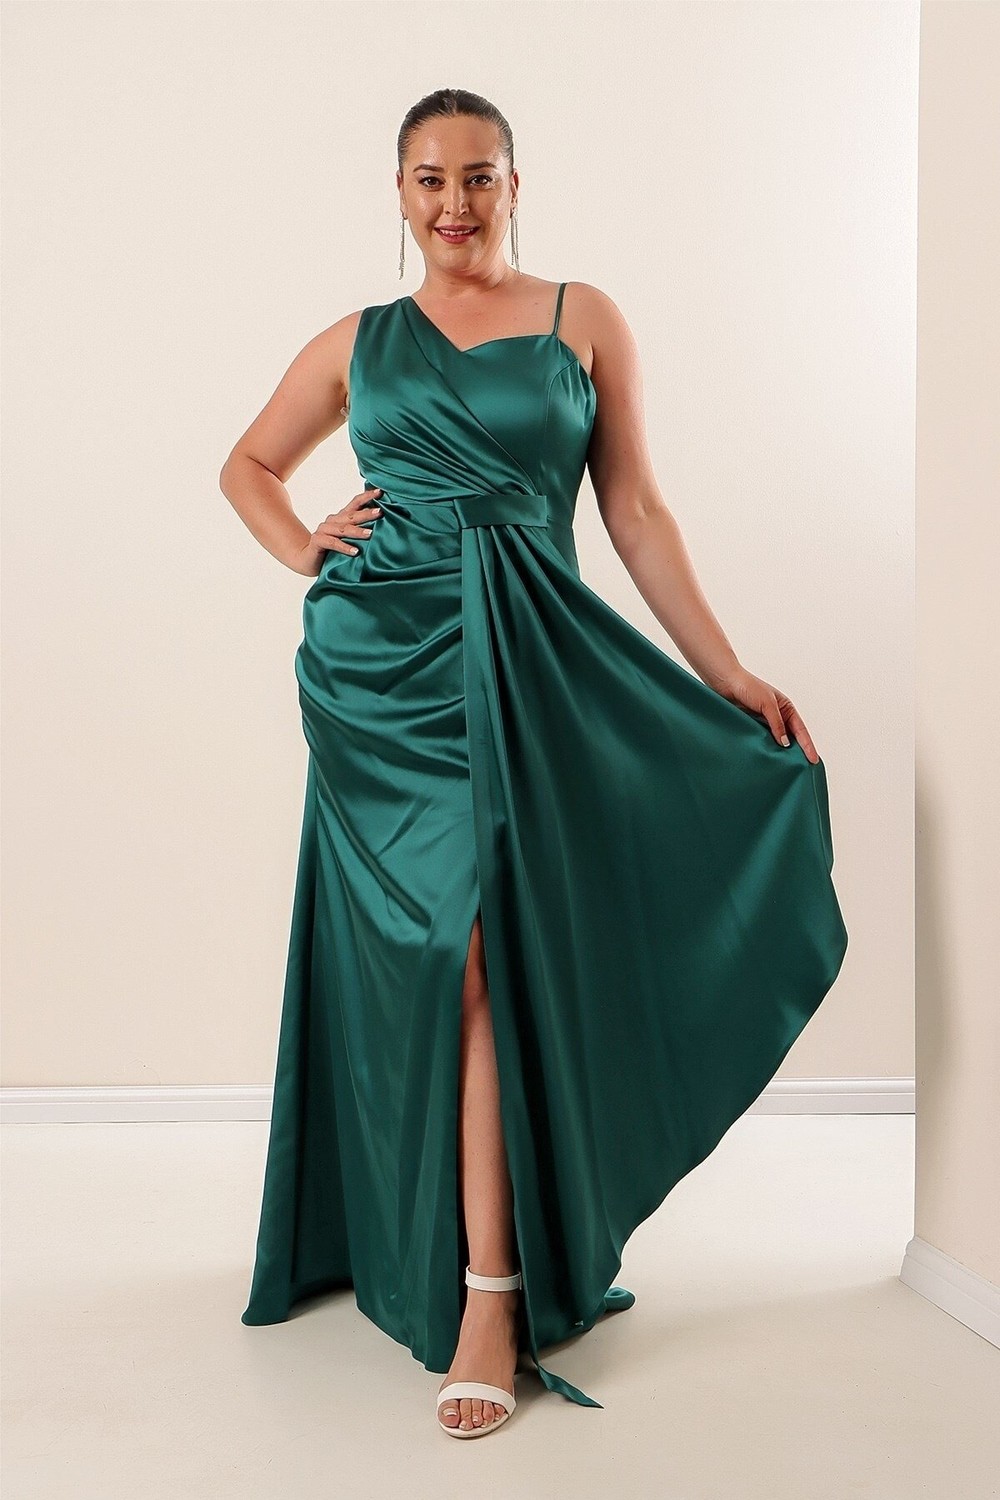 By Saygı One Side Long Satin Dress Emerald